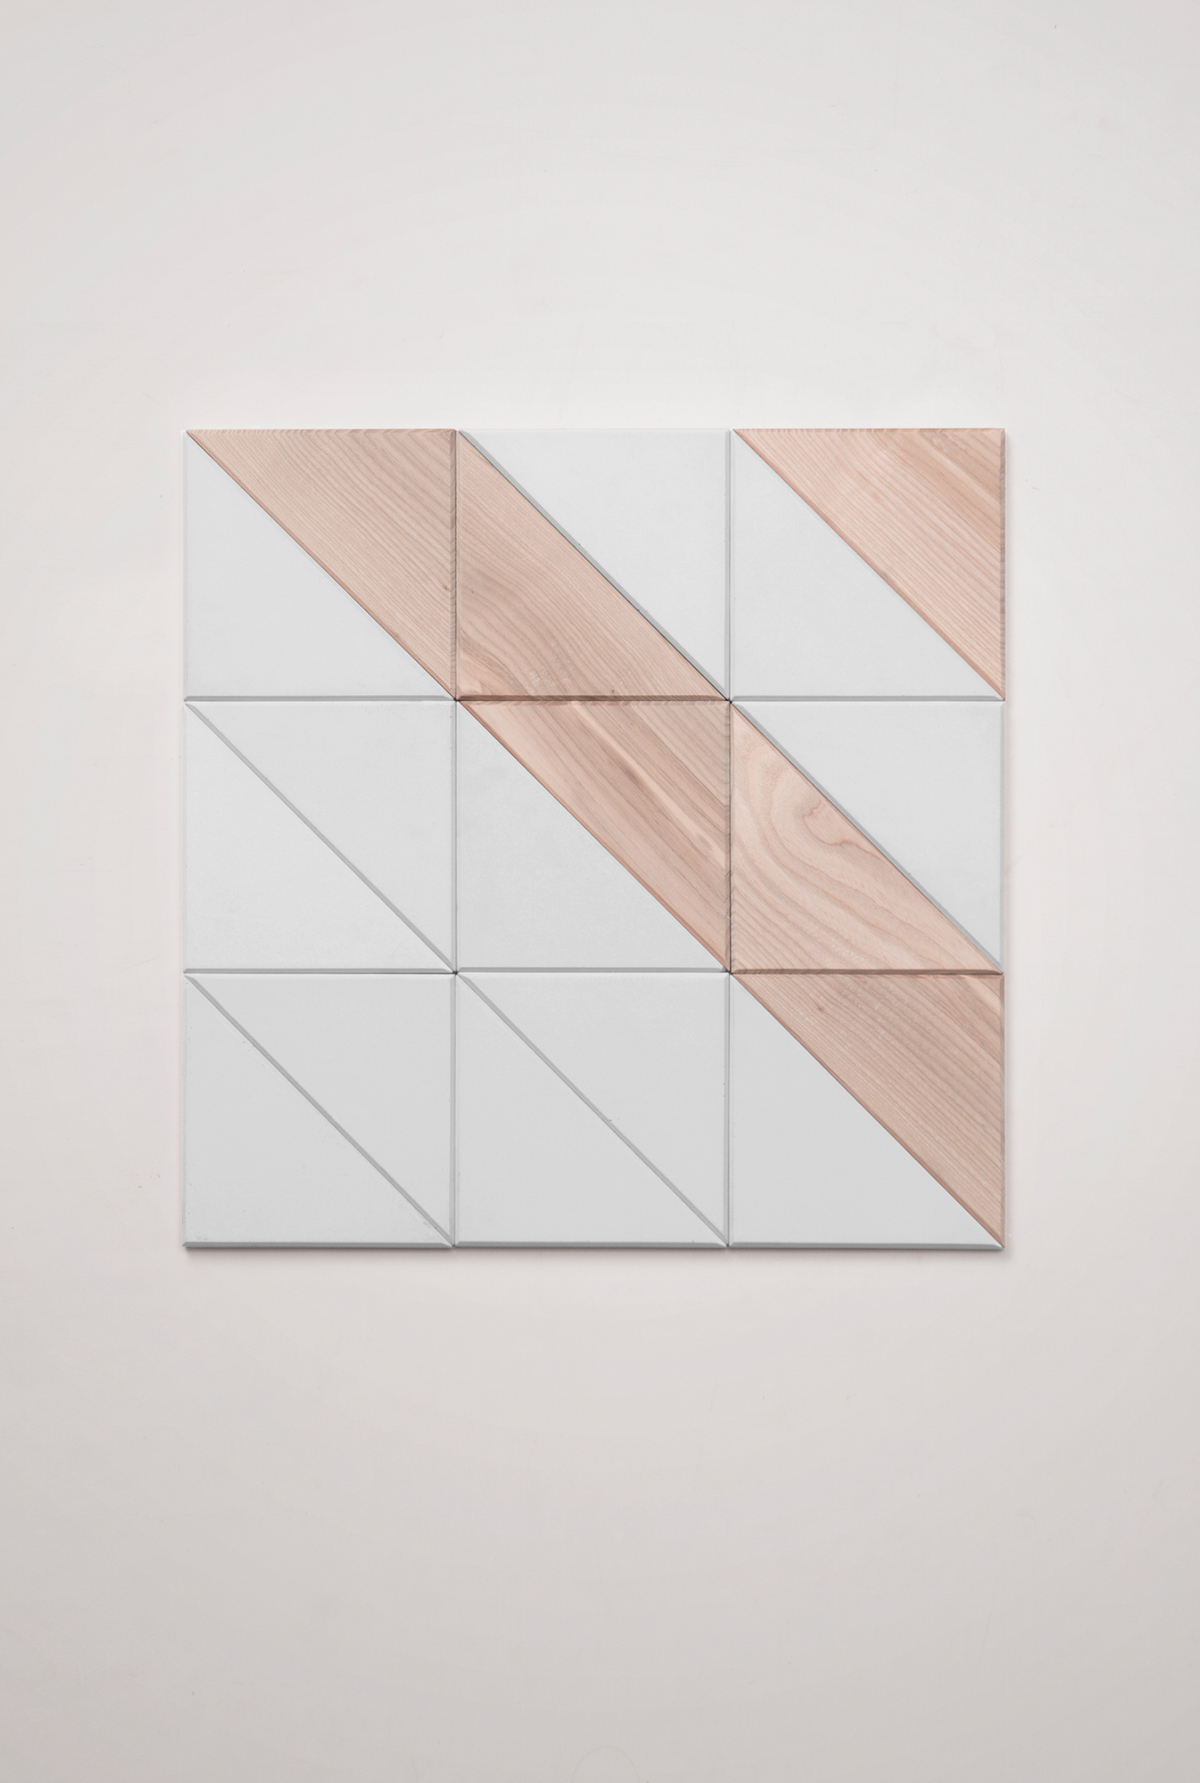 tile concrete wood LOFT minimalist fild design wall FLOOR triangle delata color mint pink grey